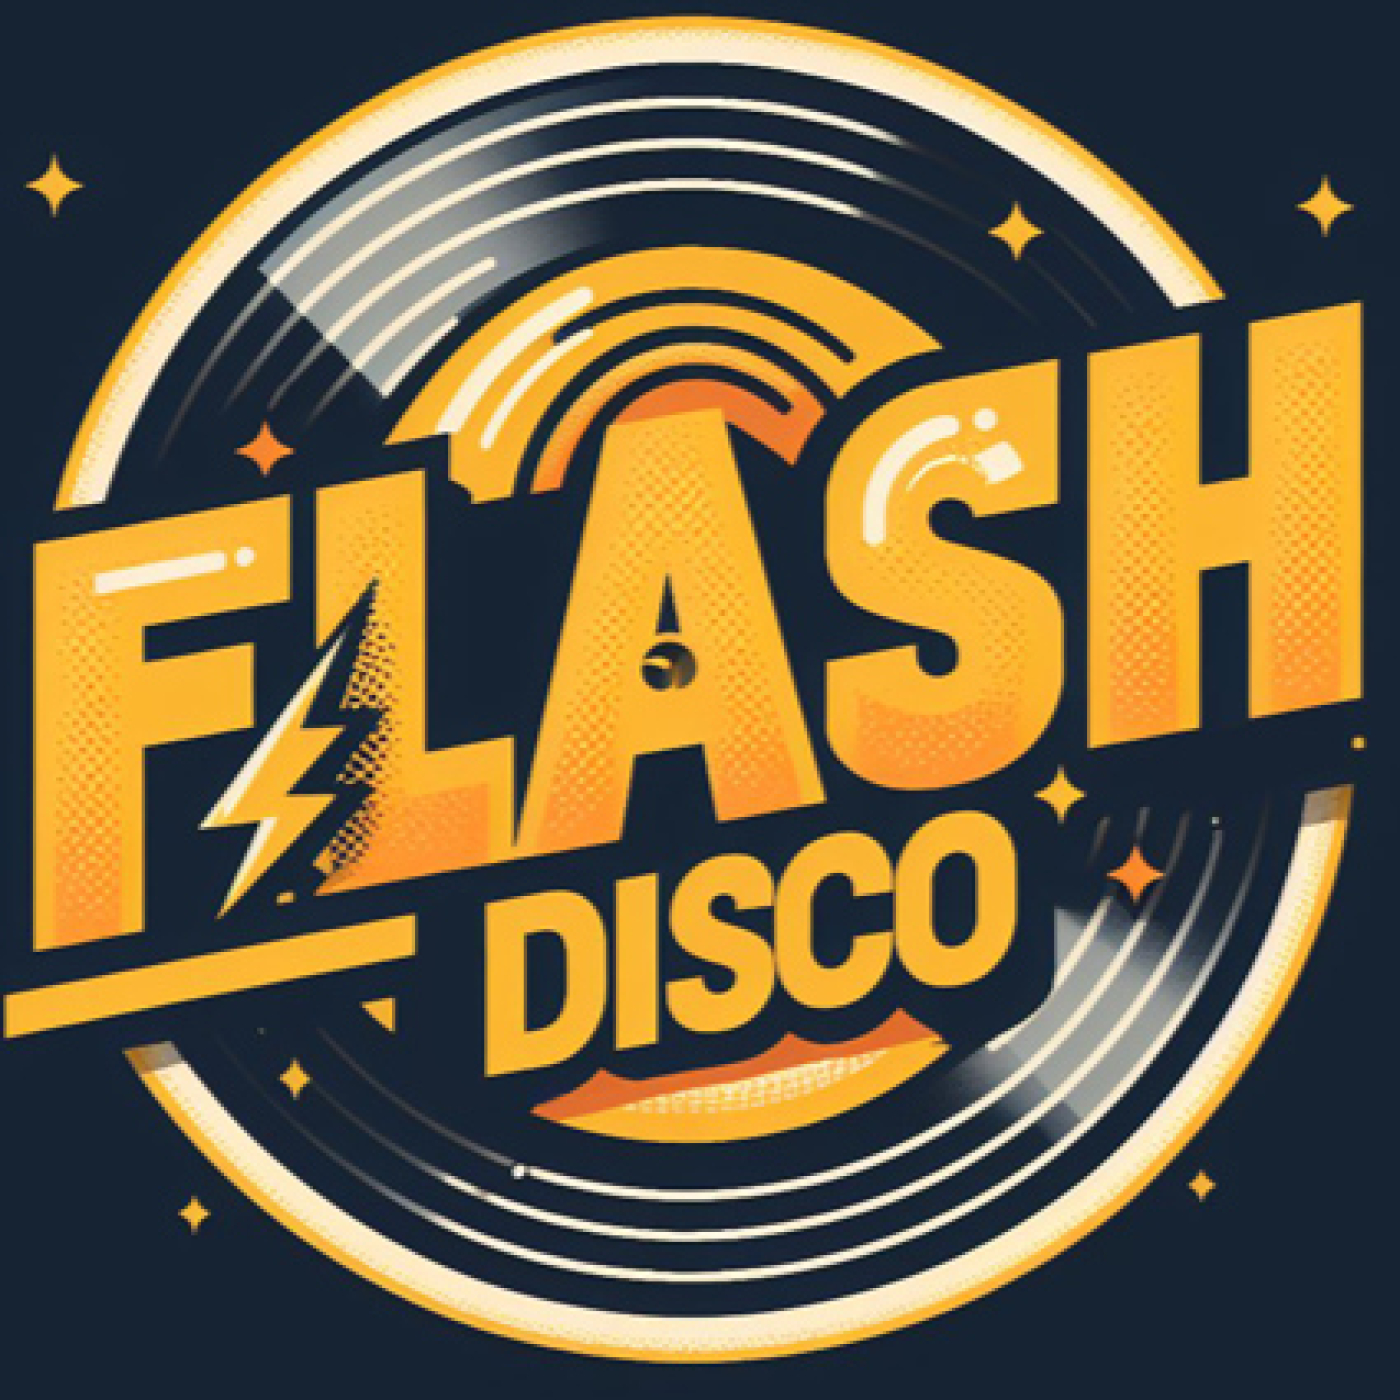 Flash Disco